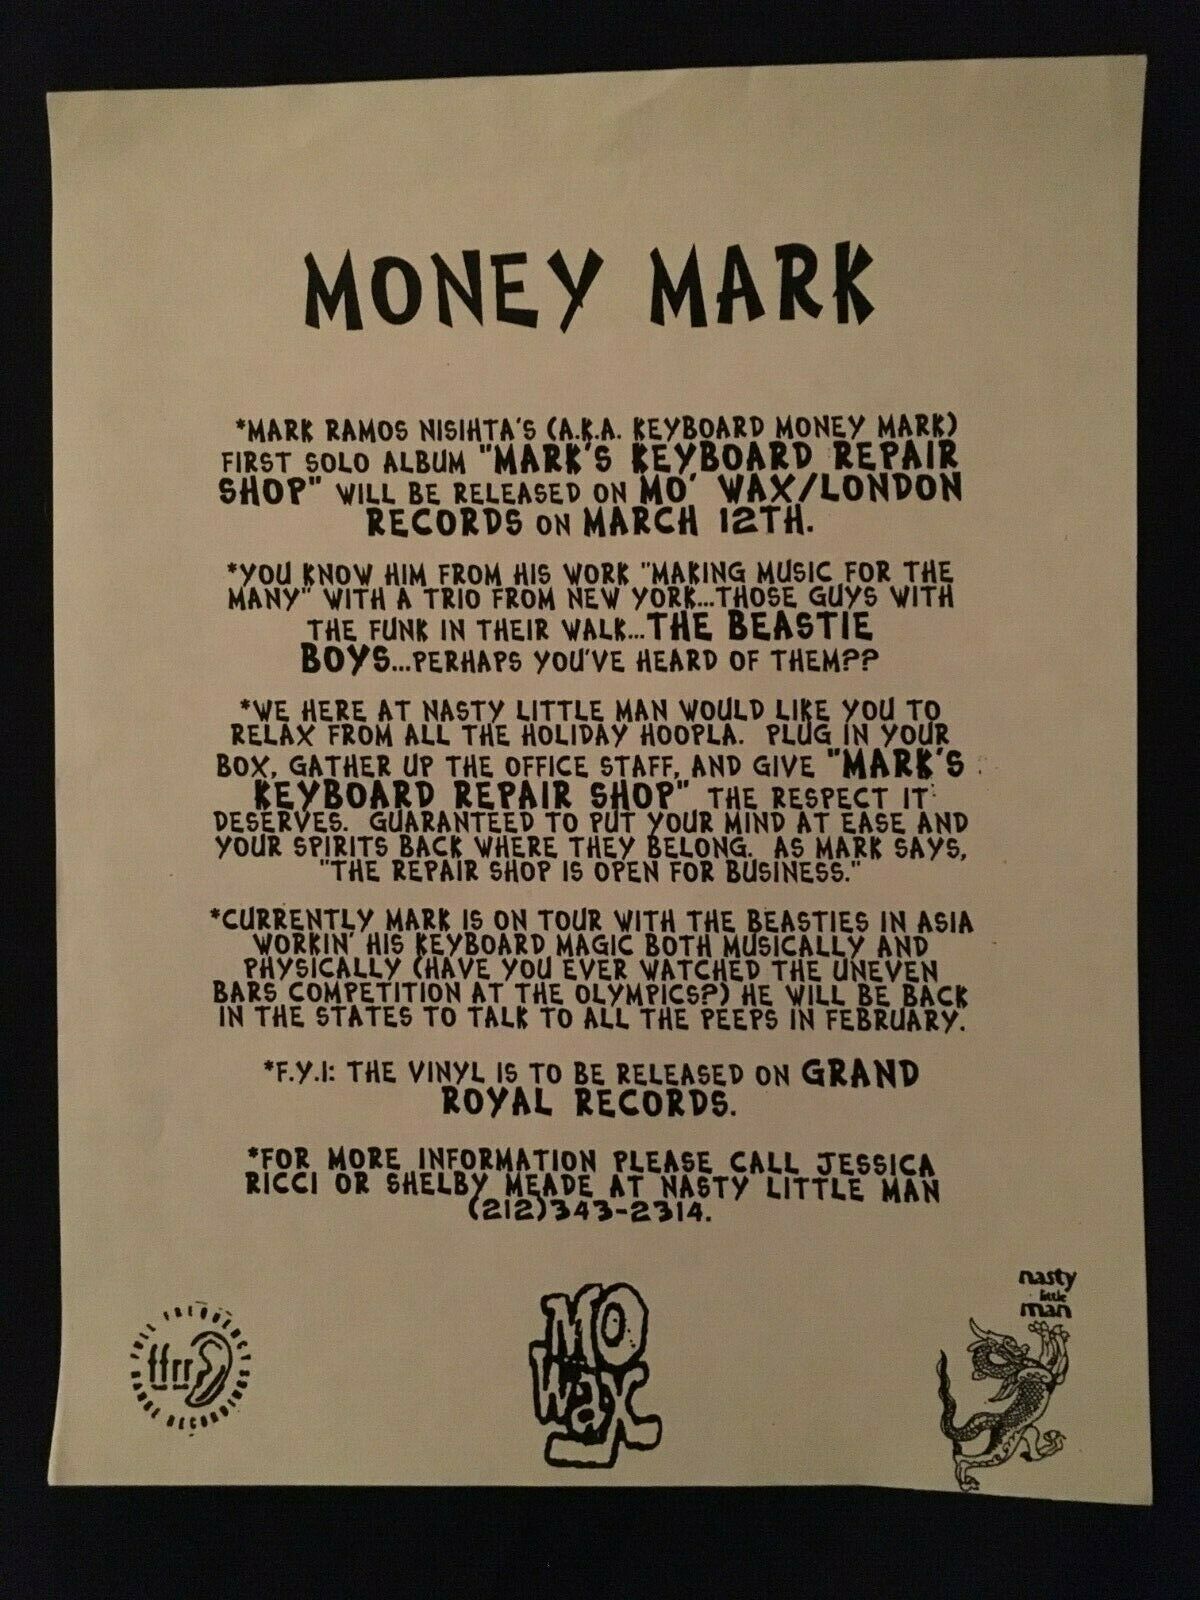 File:1995 FFRR Money Mark Press Kit Release 1.jpg